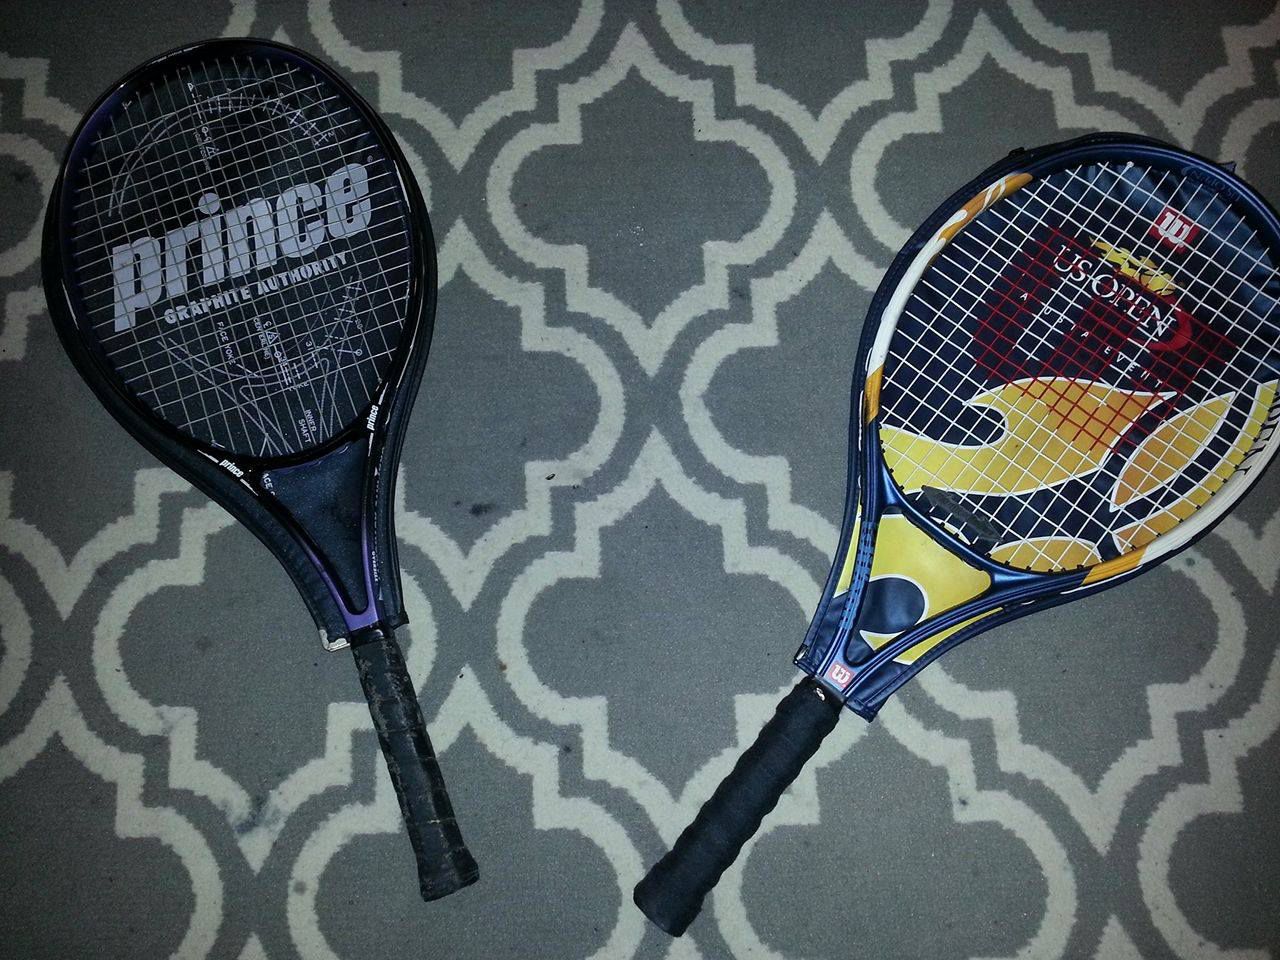 Prince tennis racket and wilson tennis racket